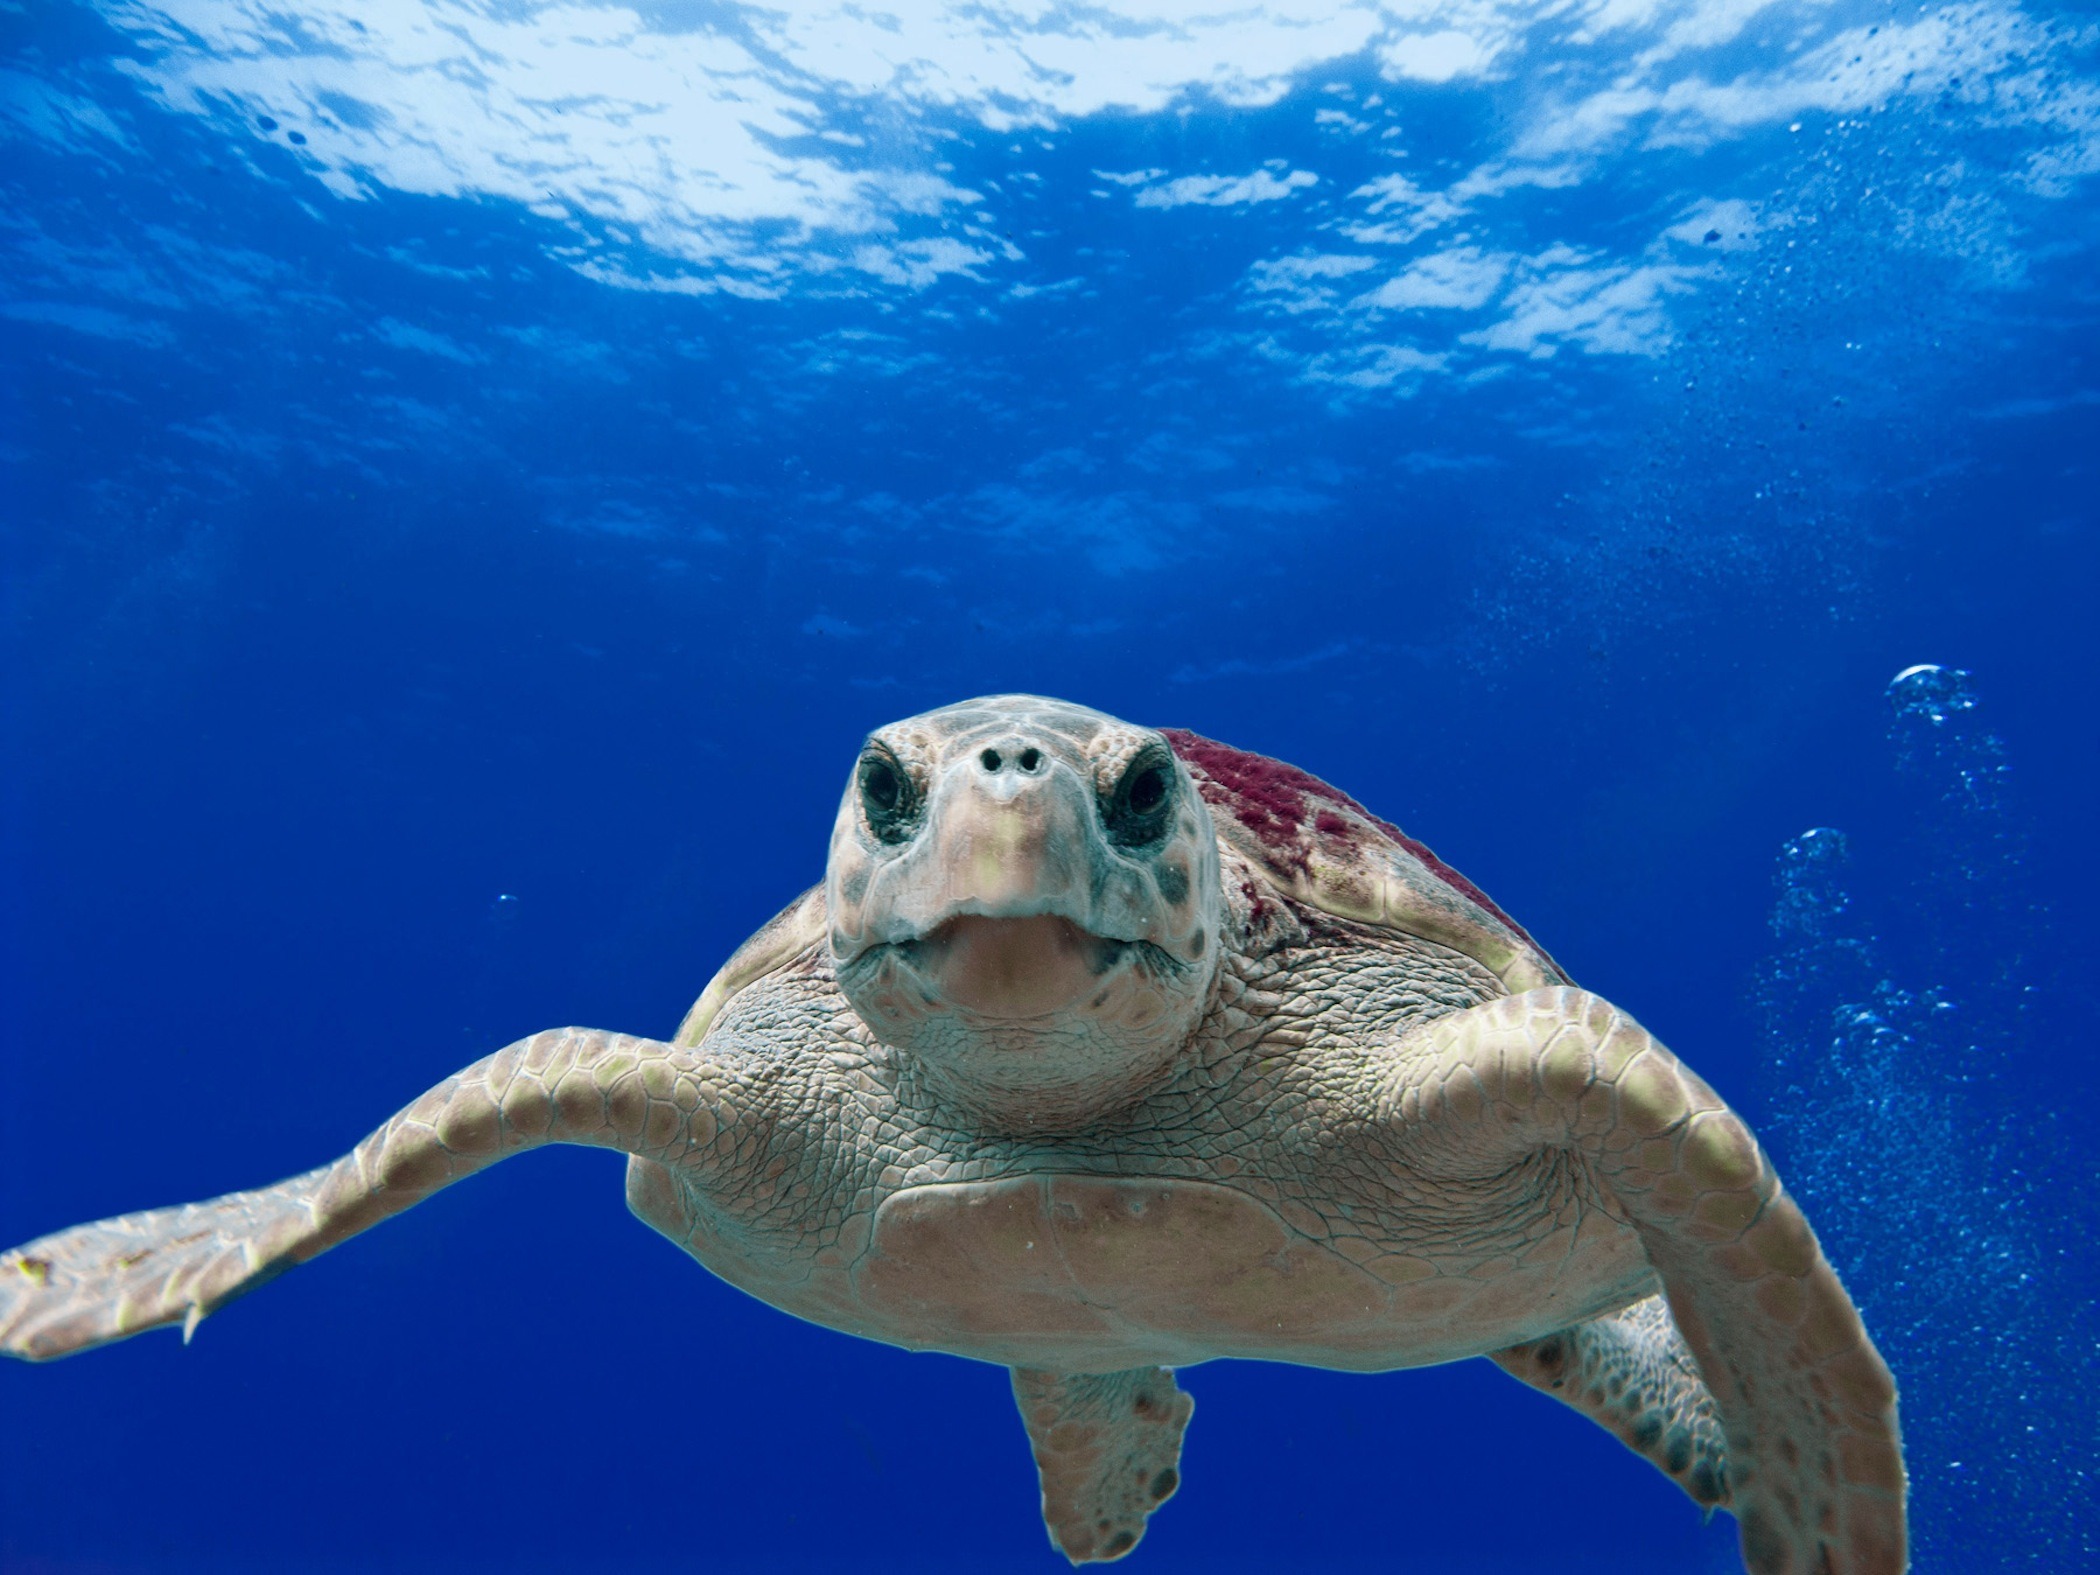 A turtle swimming in the sea